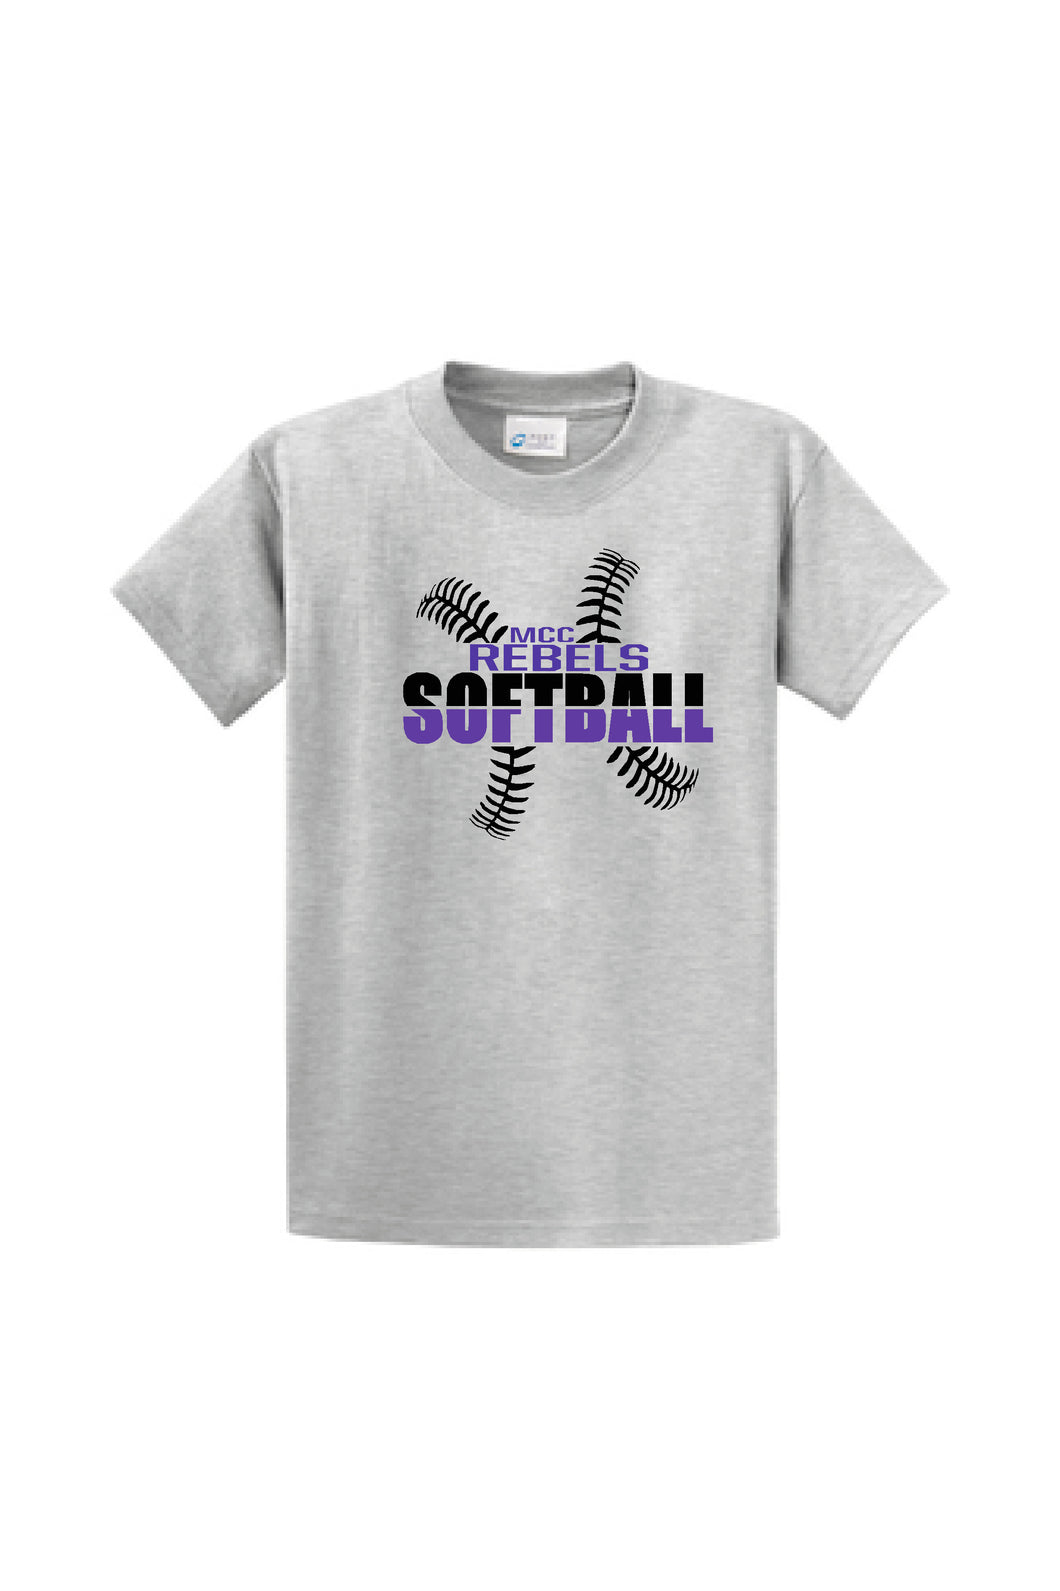 MCC Rebels Softball Port and Co. Tshirt Design 1